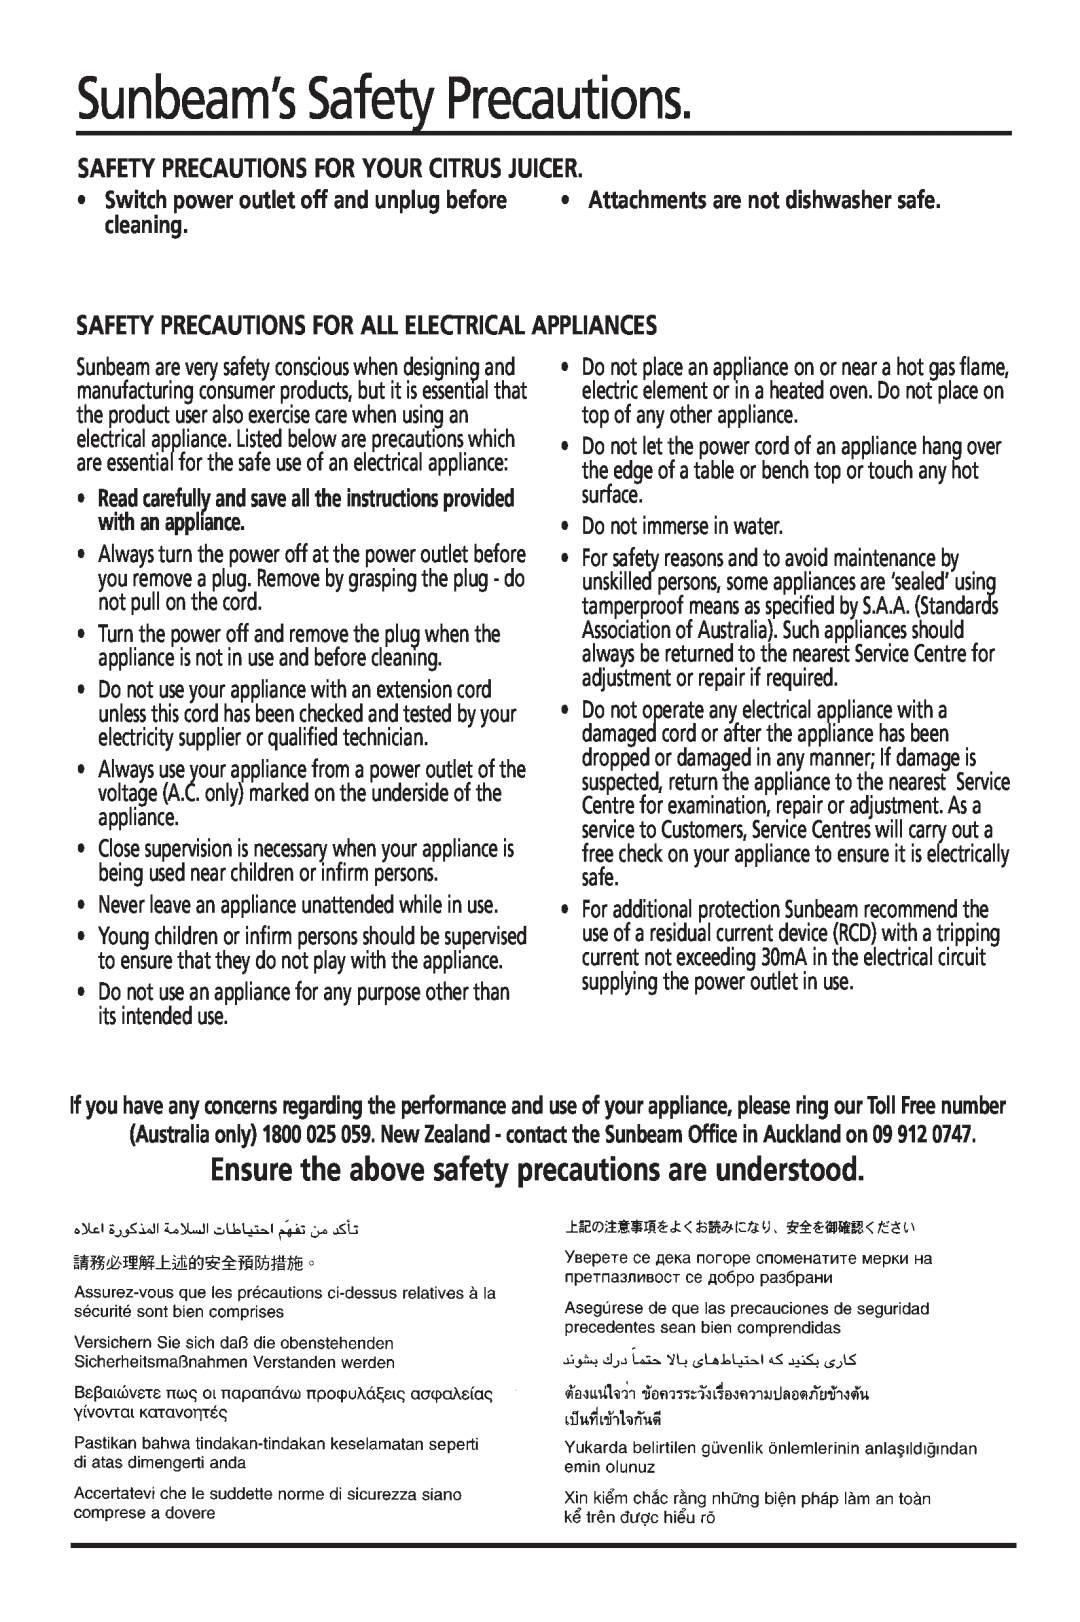 Sunbeam JE2600 manual Sunbeam’s Safety Precautions, Safety Precautions For Your Citrus Juicer 